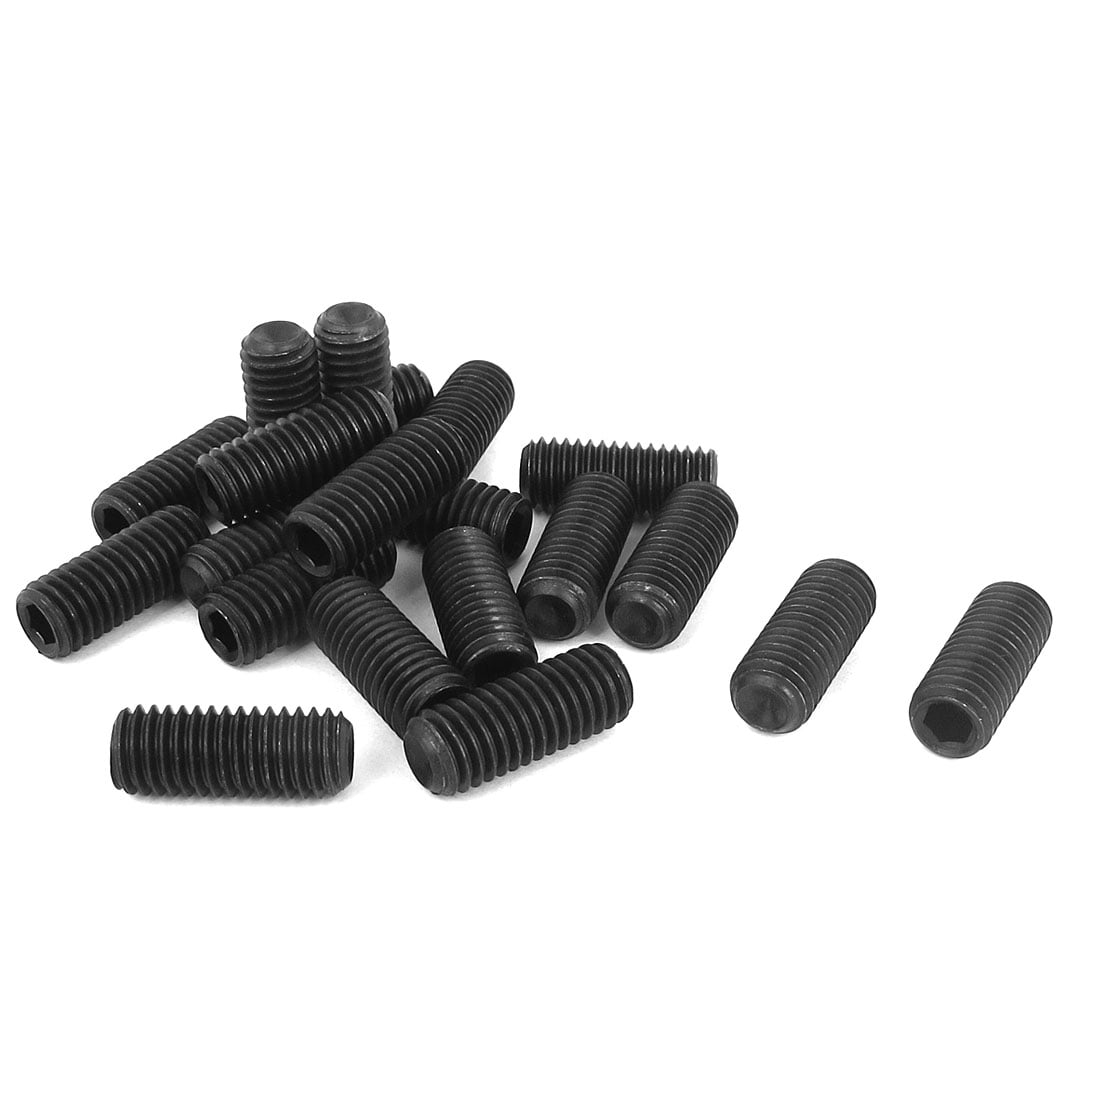 M8 x 12mm 1.25mm Pitch Hex Socket Set Cup Point Grub Screws Black 30pcs 